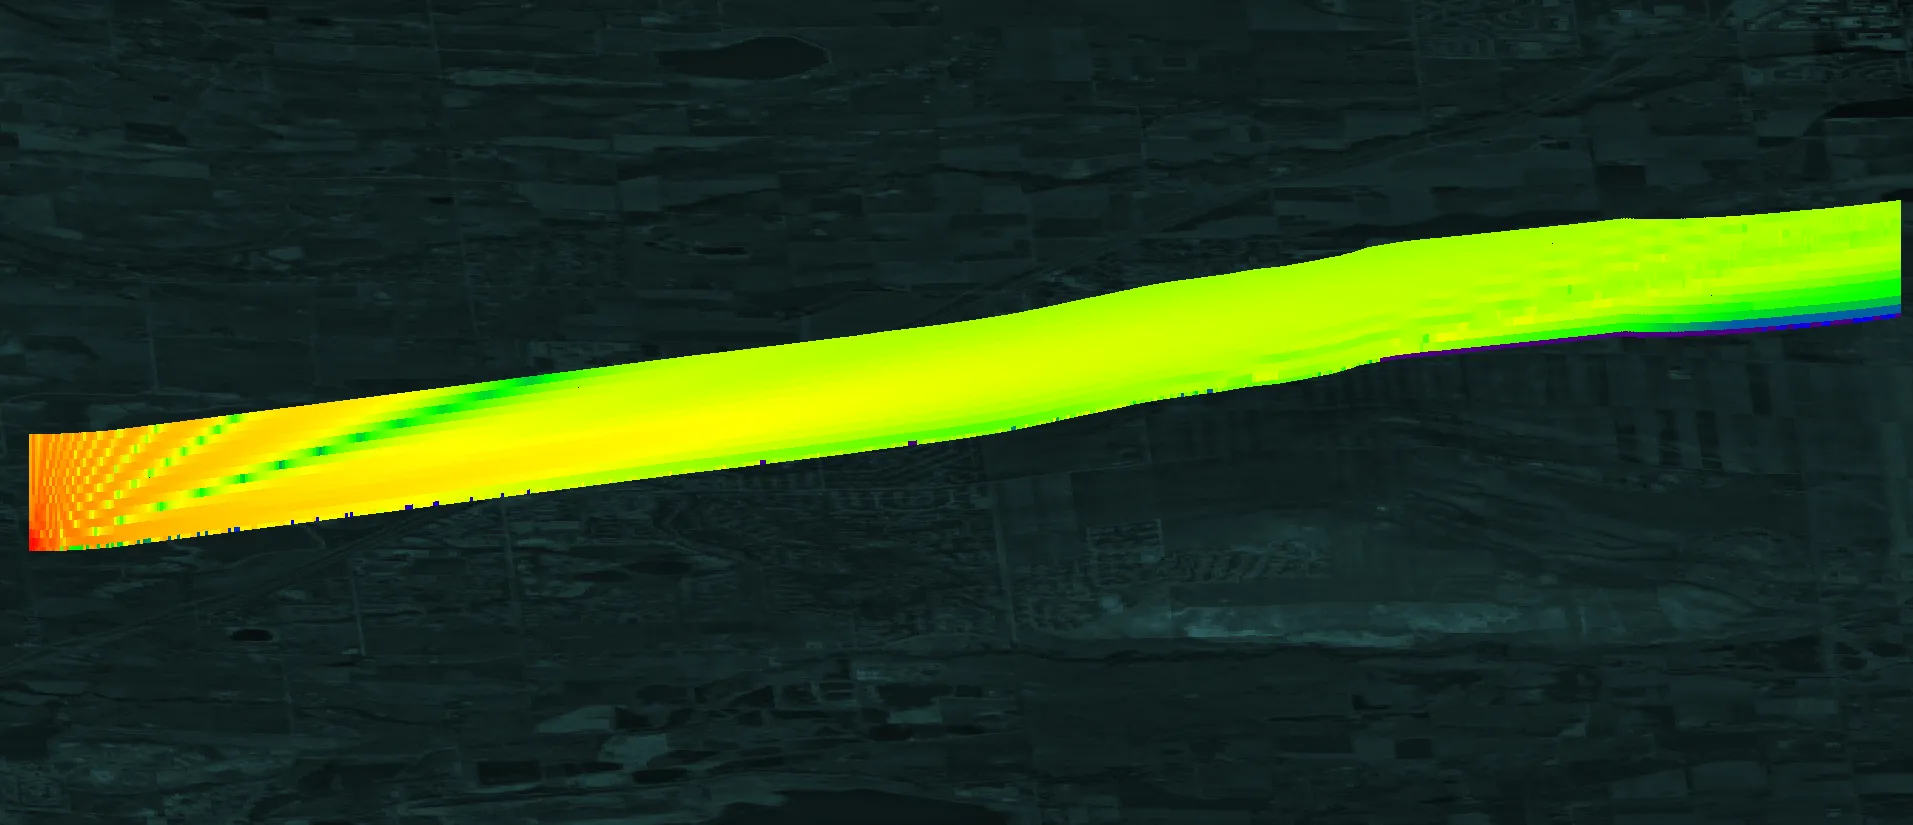 Vertical Plane Ray Model